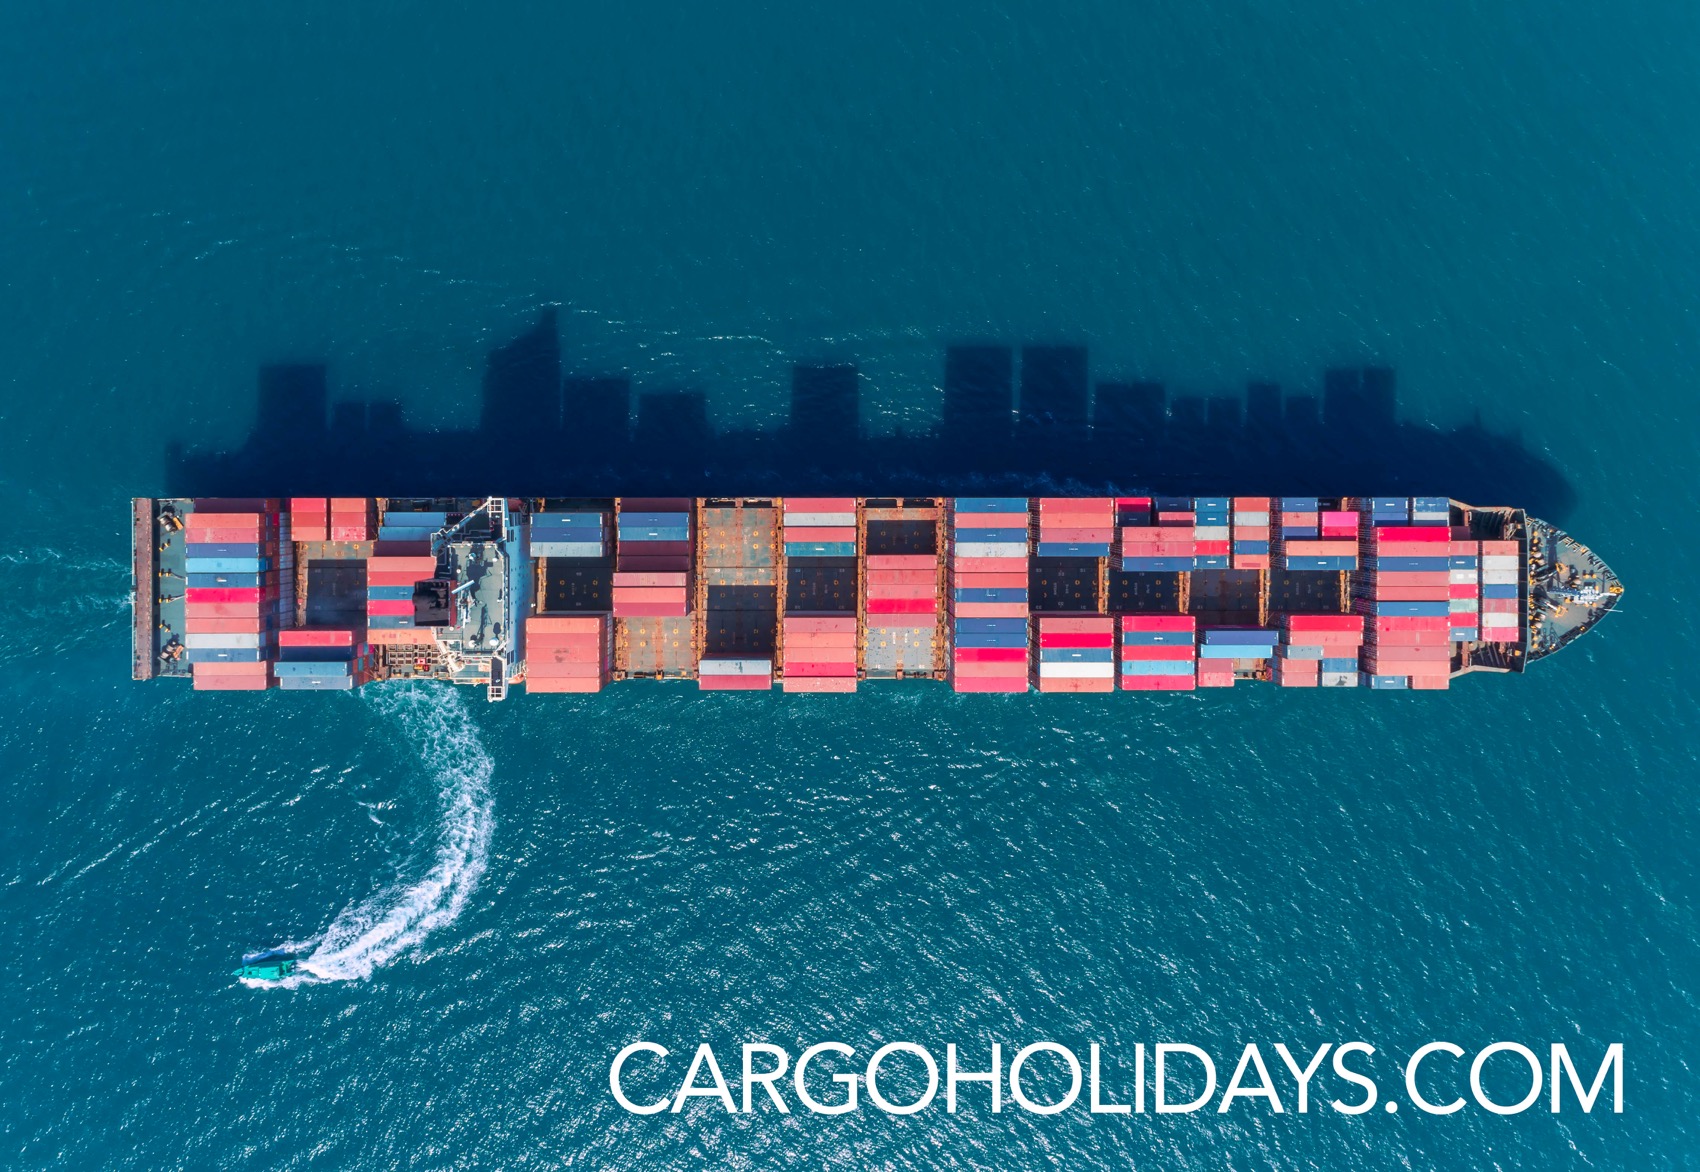 Dry cargo ship travel travel